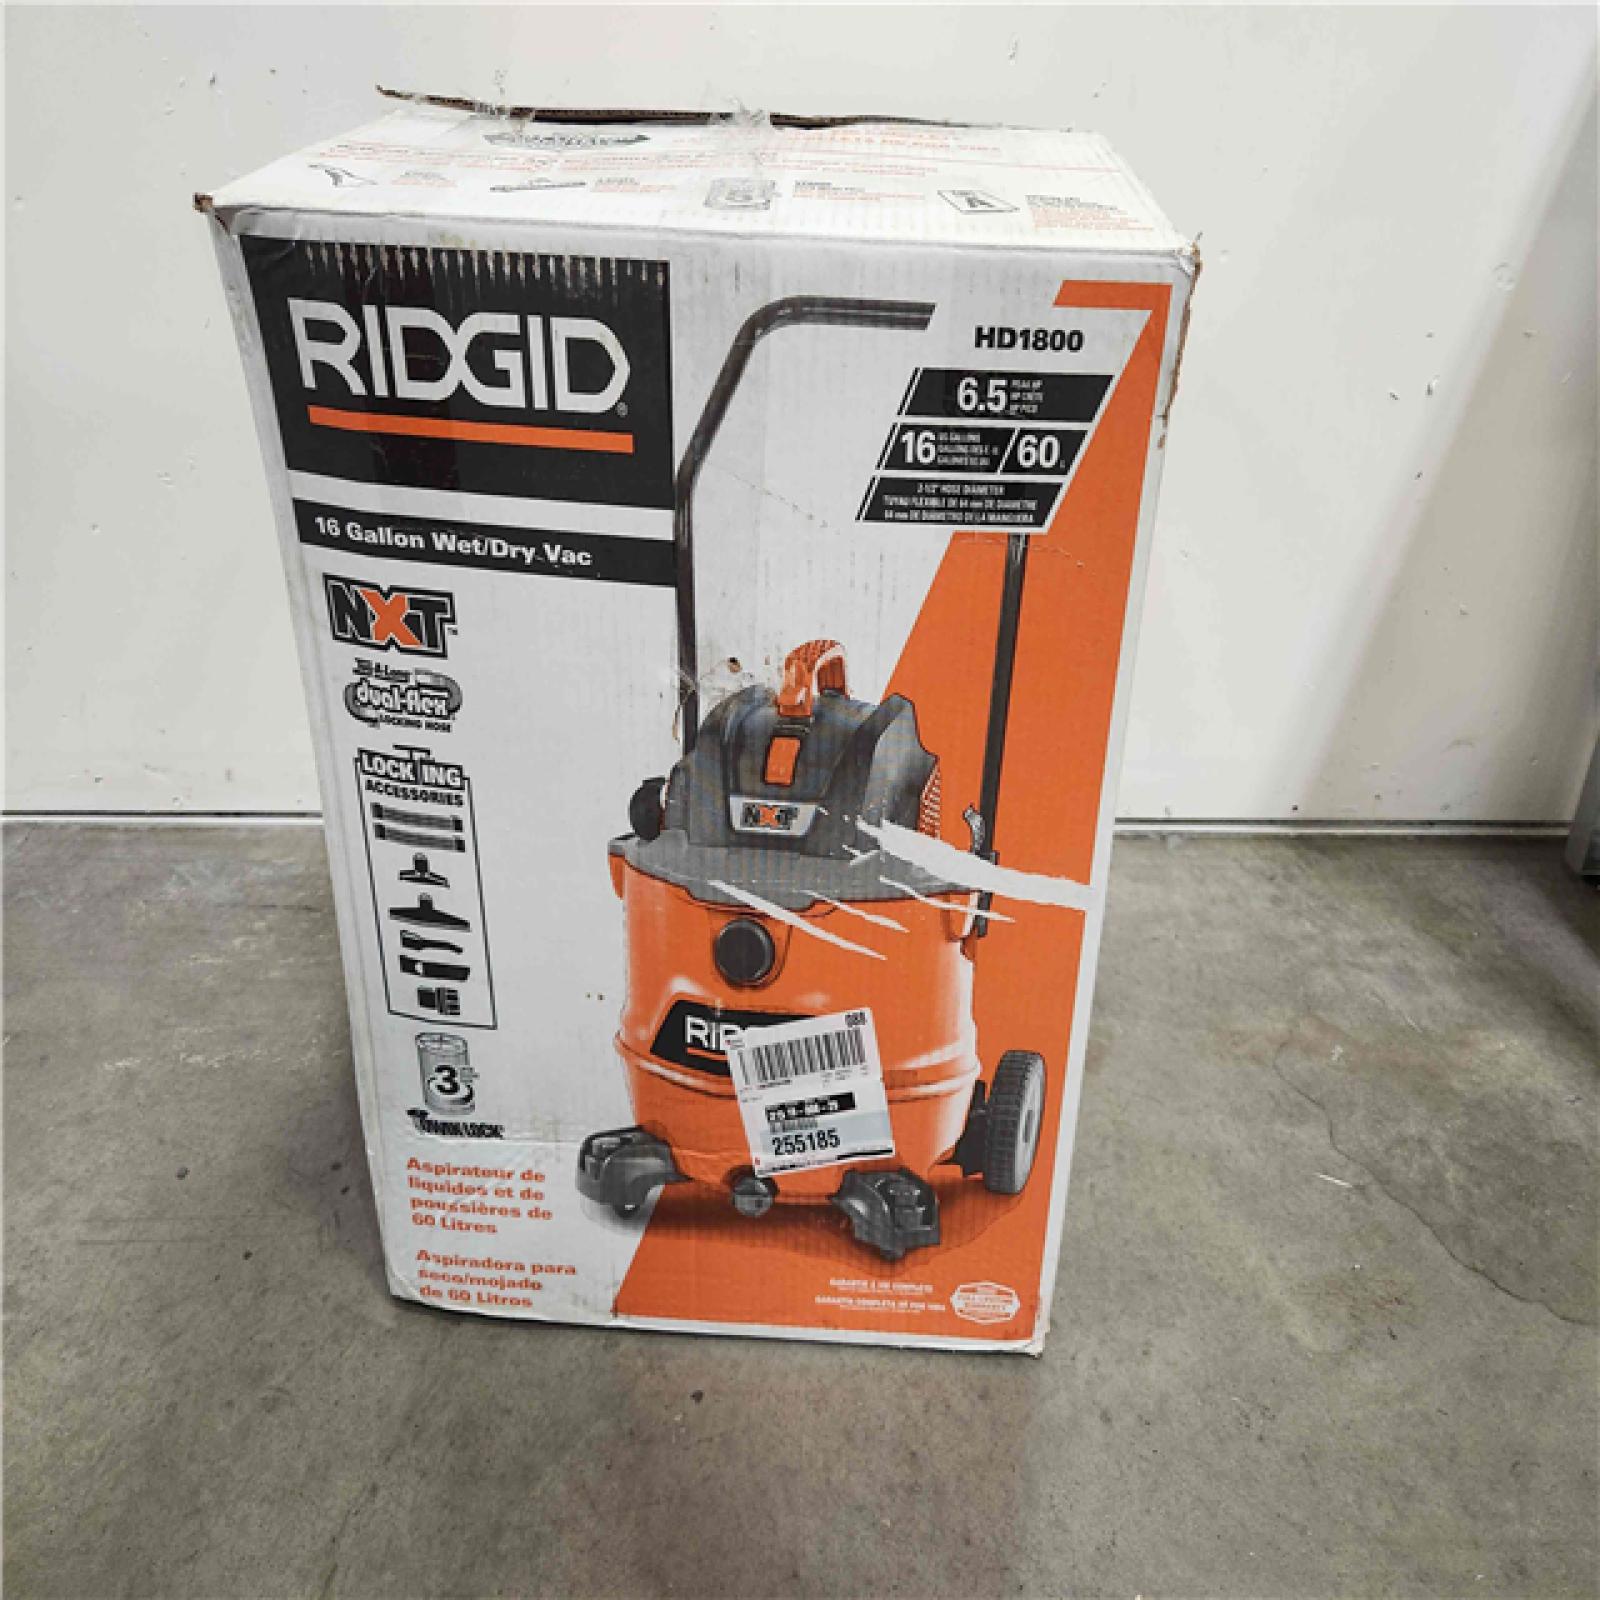 Phoenix Location RIDGID 16 Gallon 6.5 Peak HP NXT Wet/Dry Shop Vacuum with Cart, Fine Dust Filter, Locking Hose and Accessories